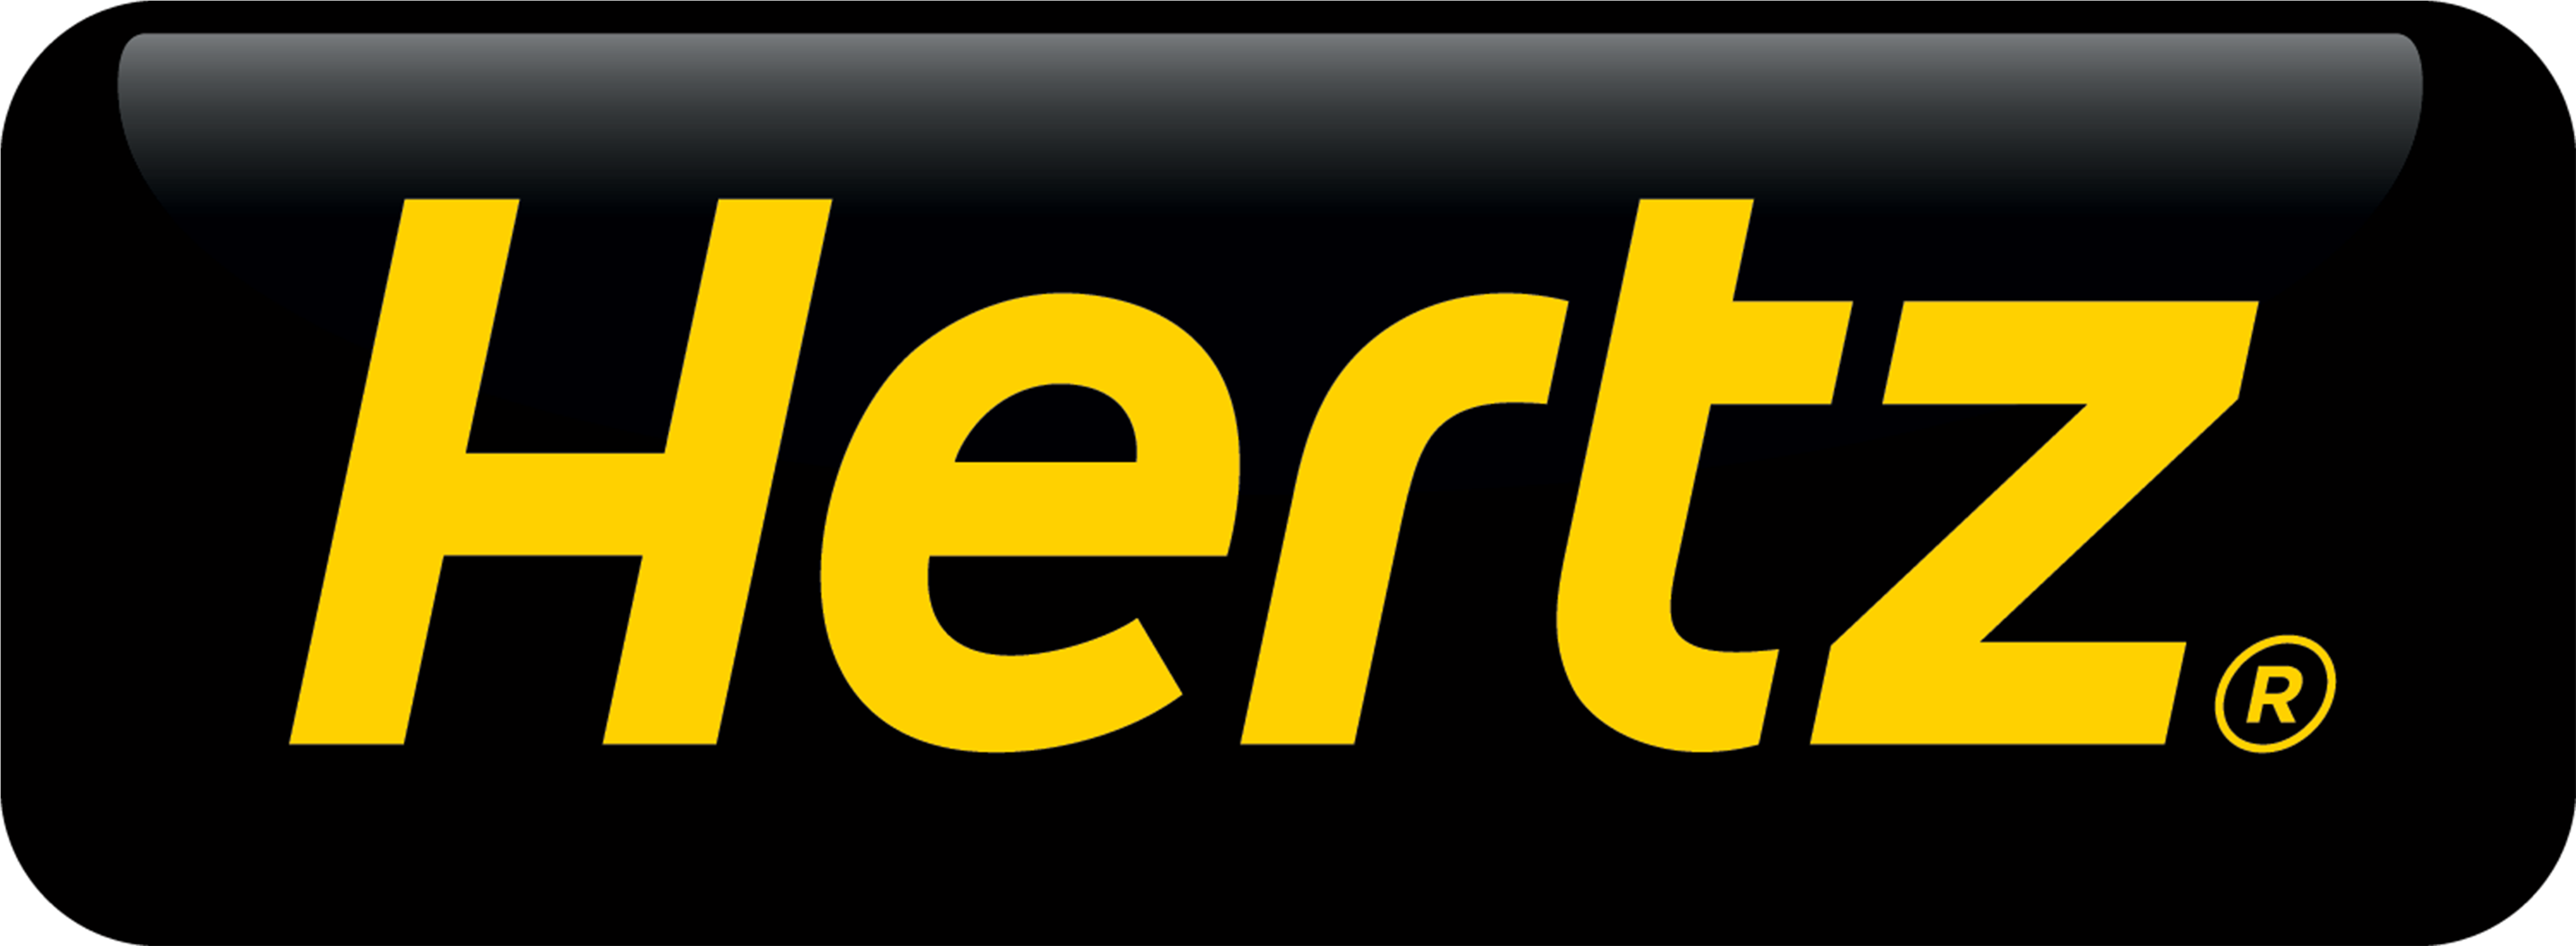 Download Hertz Hertz Car Rental Logo Png Image With No